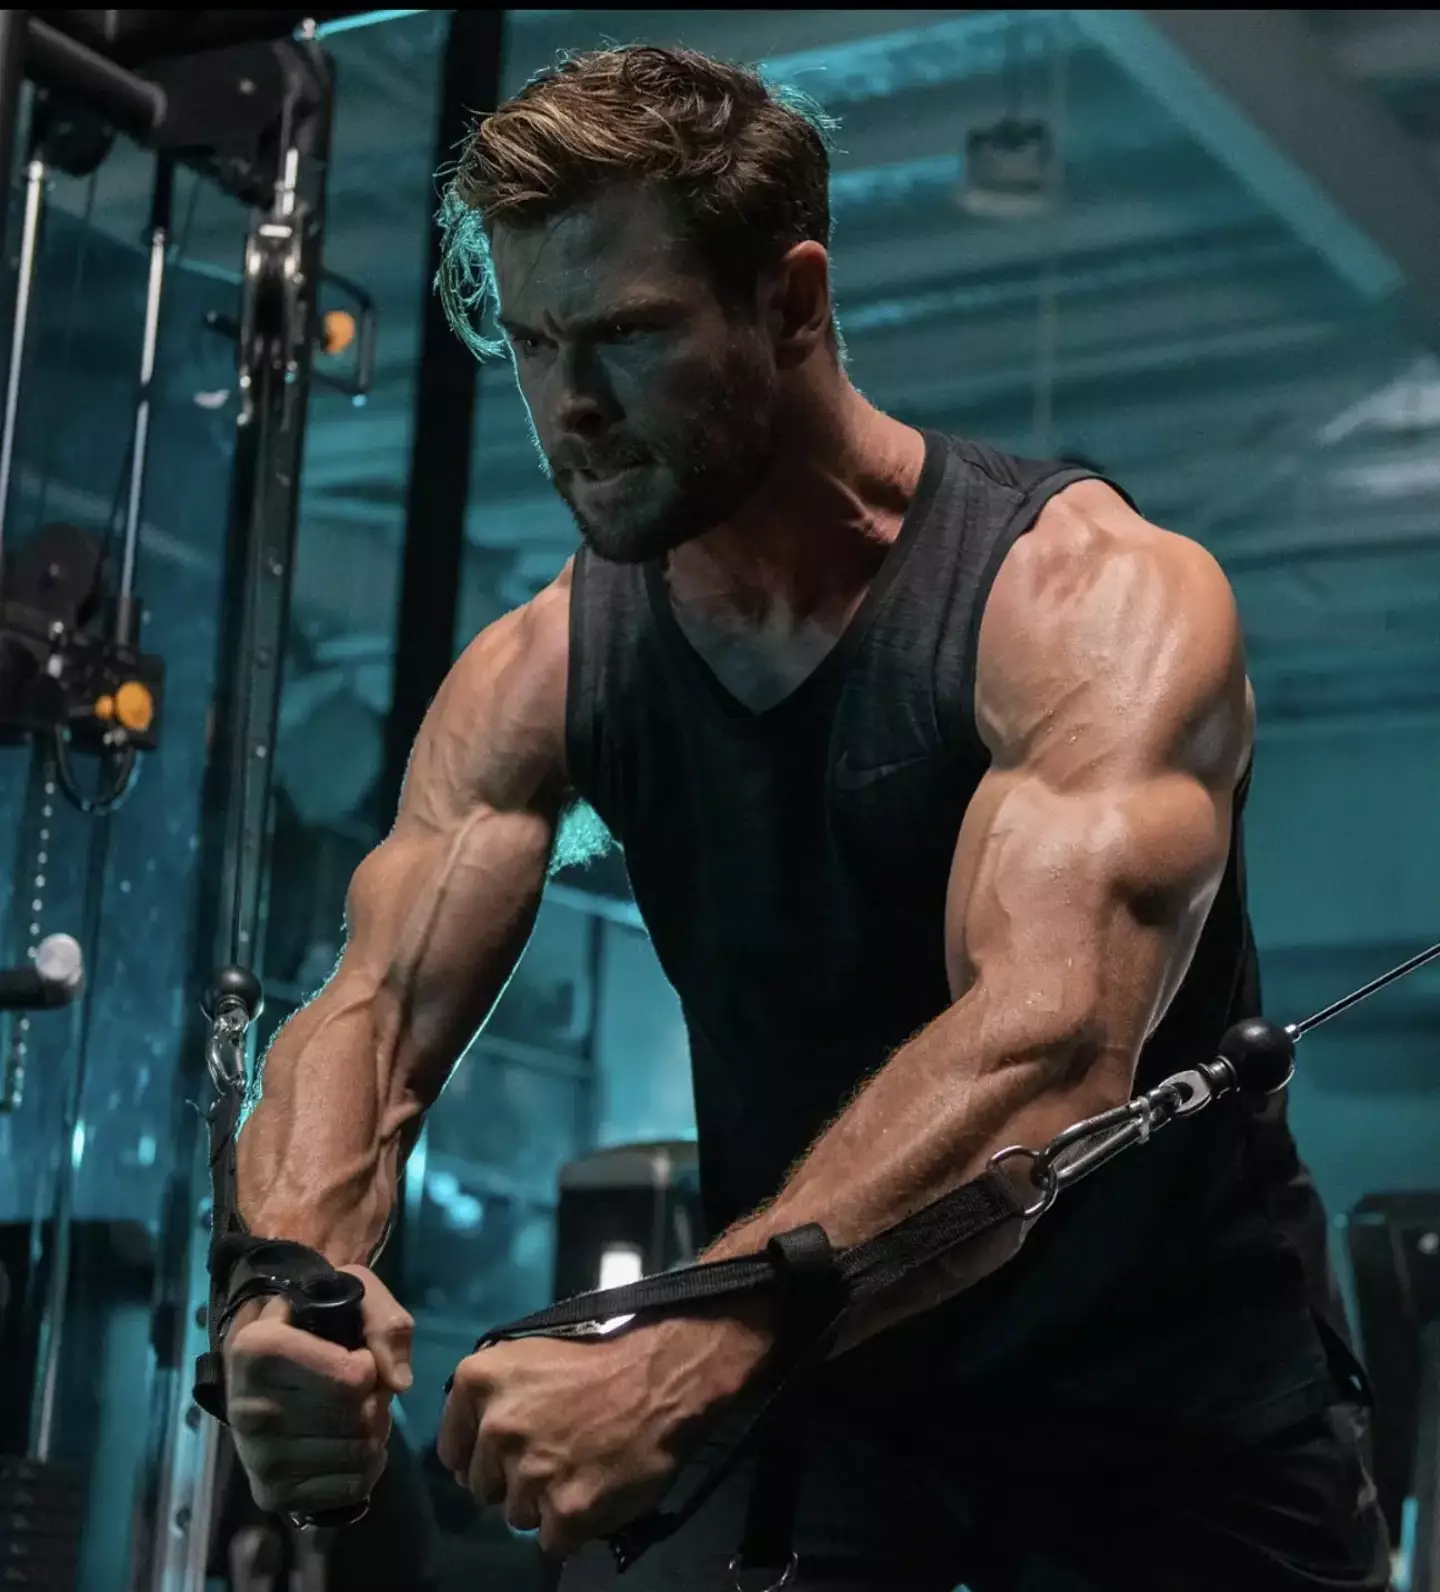 Rogan said he thinks Hemsworth uses steroids.